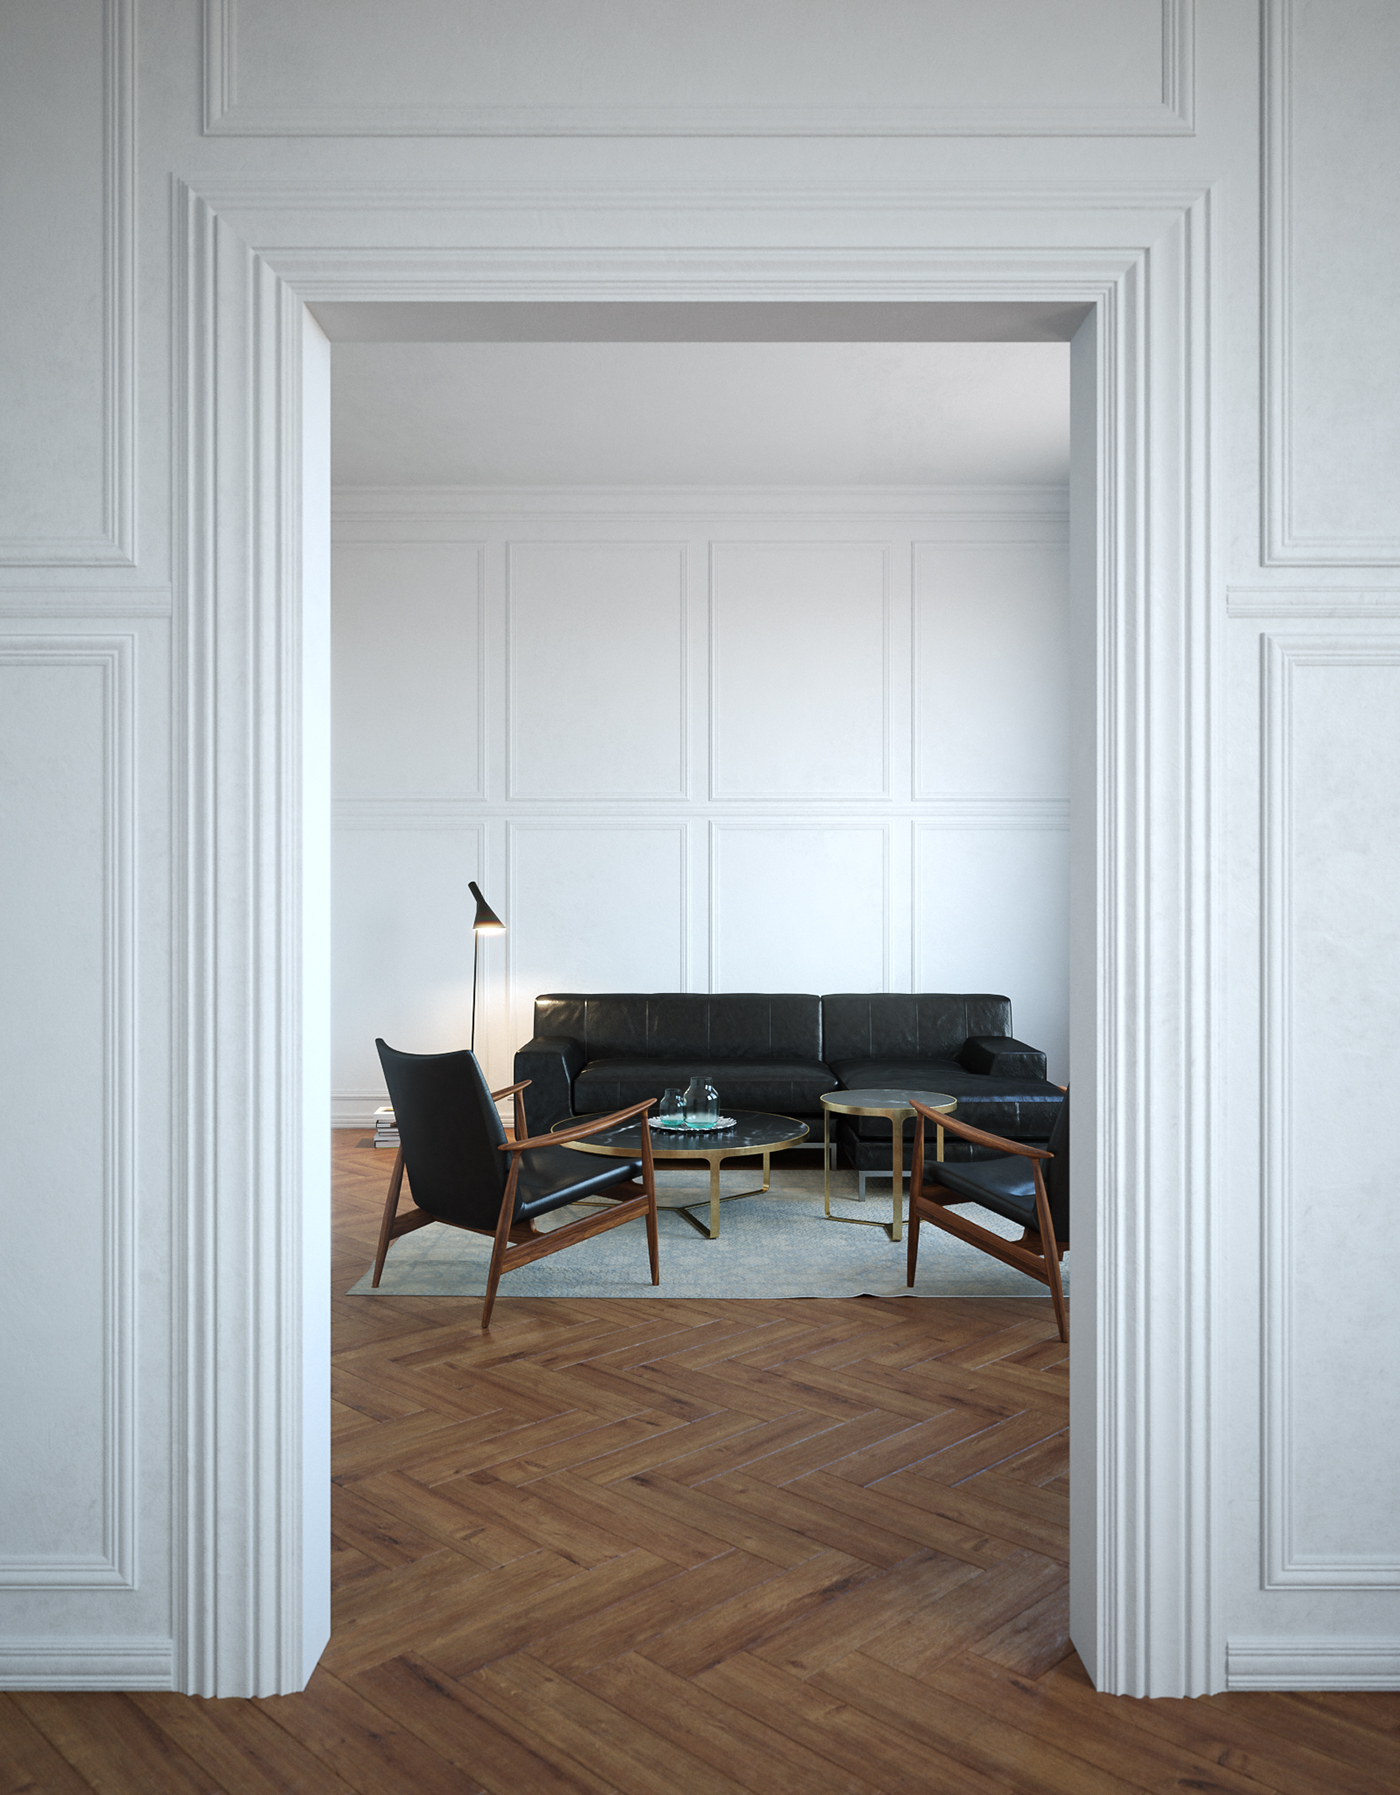 3ds max vray interior design  architecture arch viz visualization Render photorealism